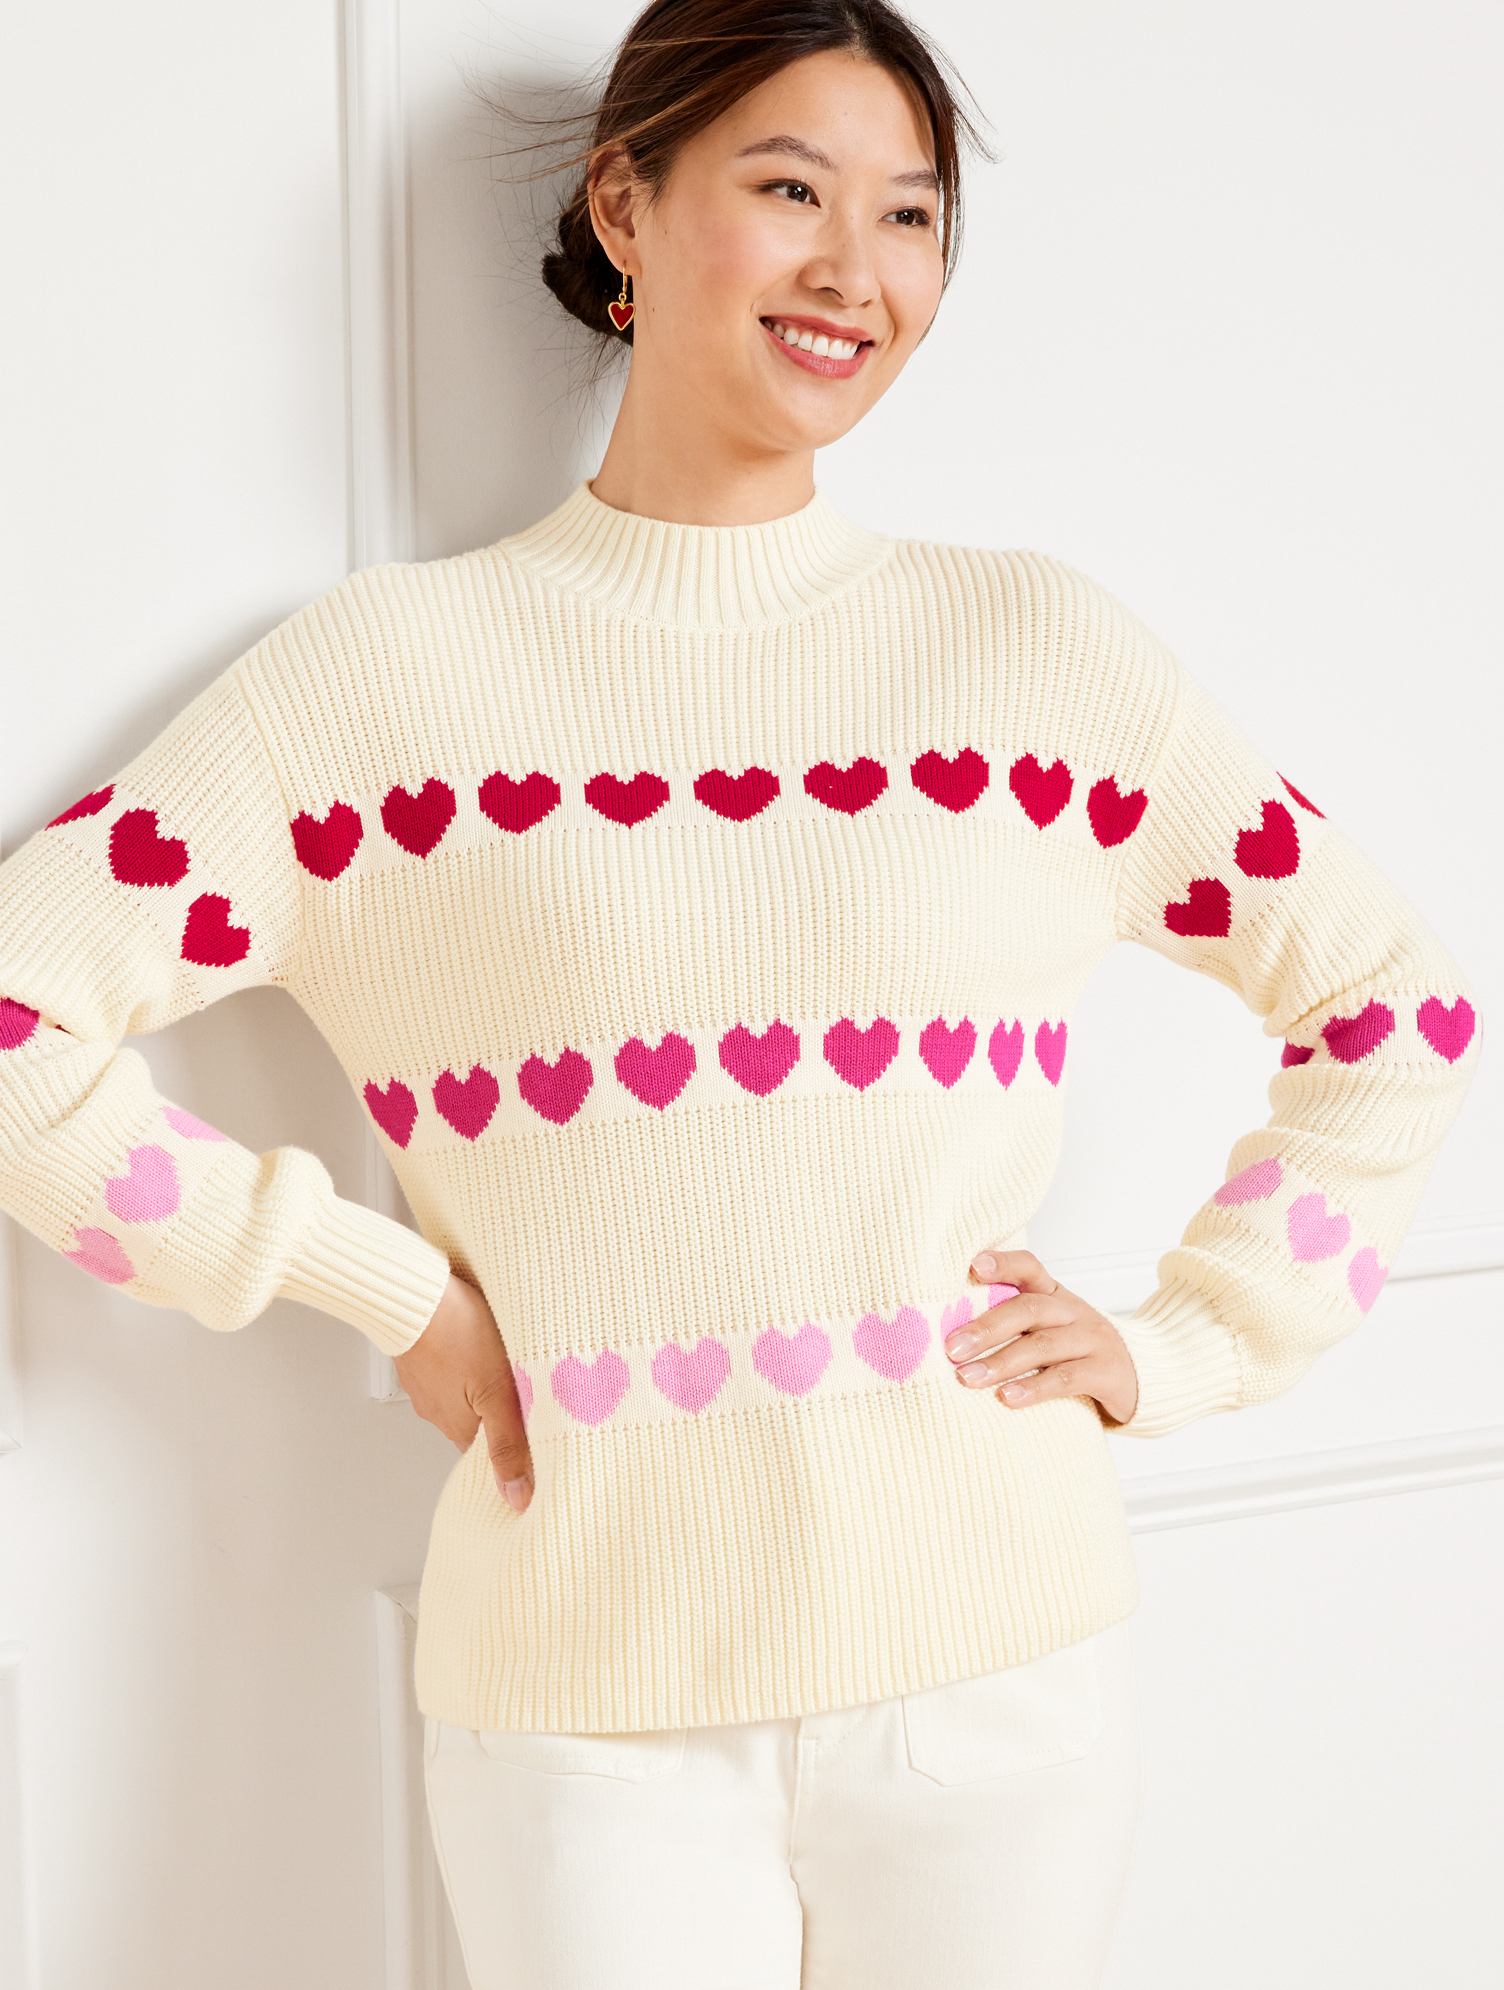 Talbots Shaker Stitch Mockneck Sweater - Heart - Ivory - 3x